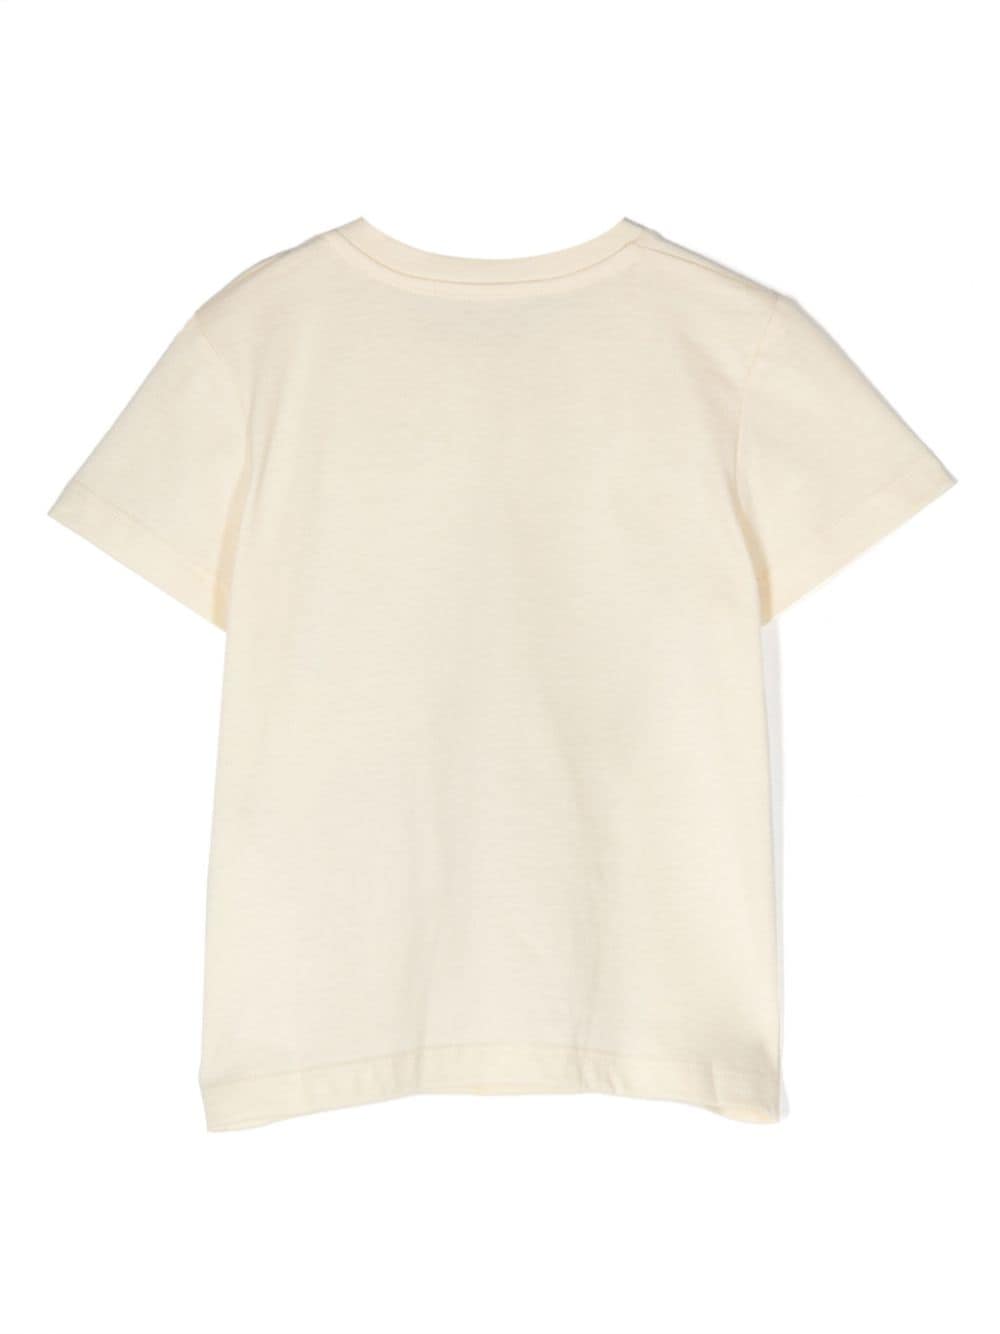 T-shirt beige neonato unisex